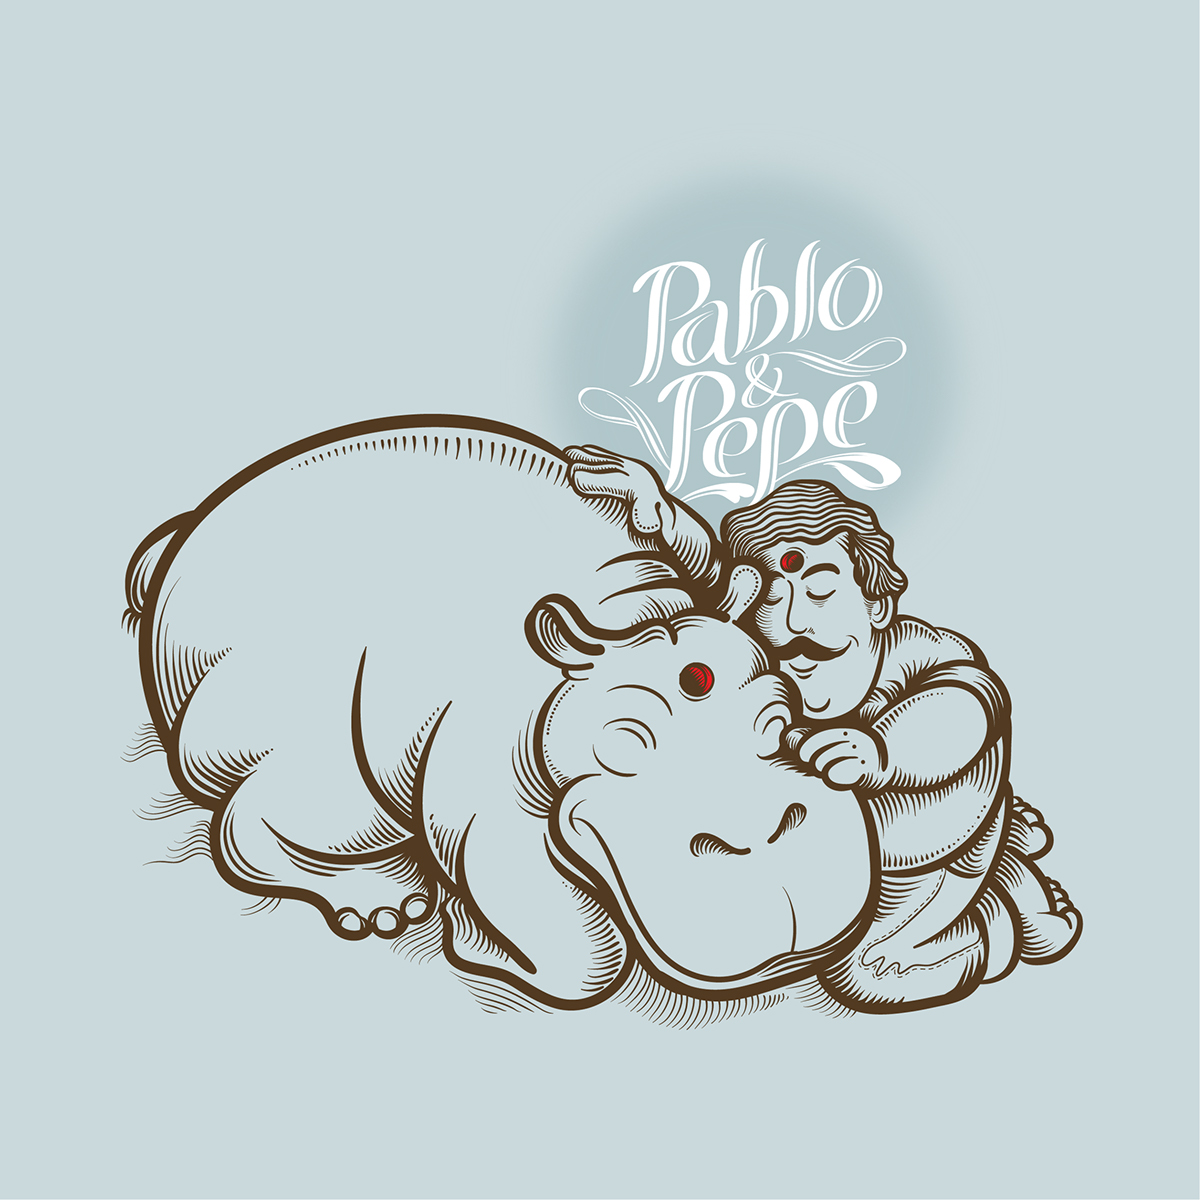 colombia Pablo Escobar hipopotamo hippo Muerte comic